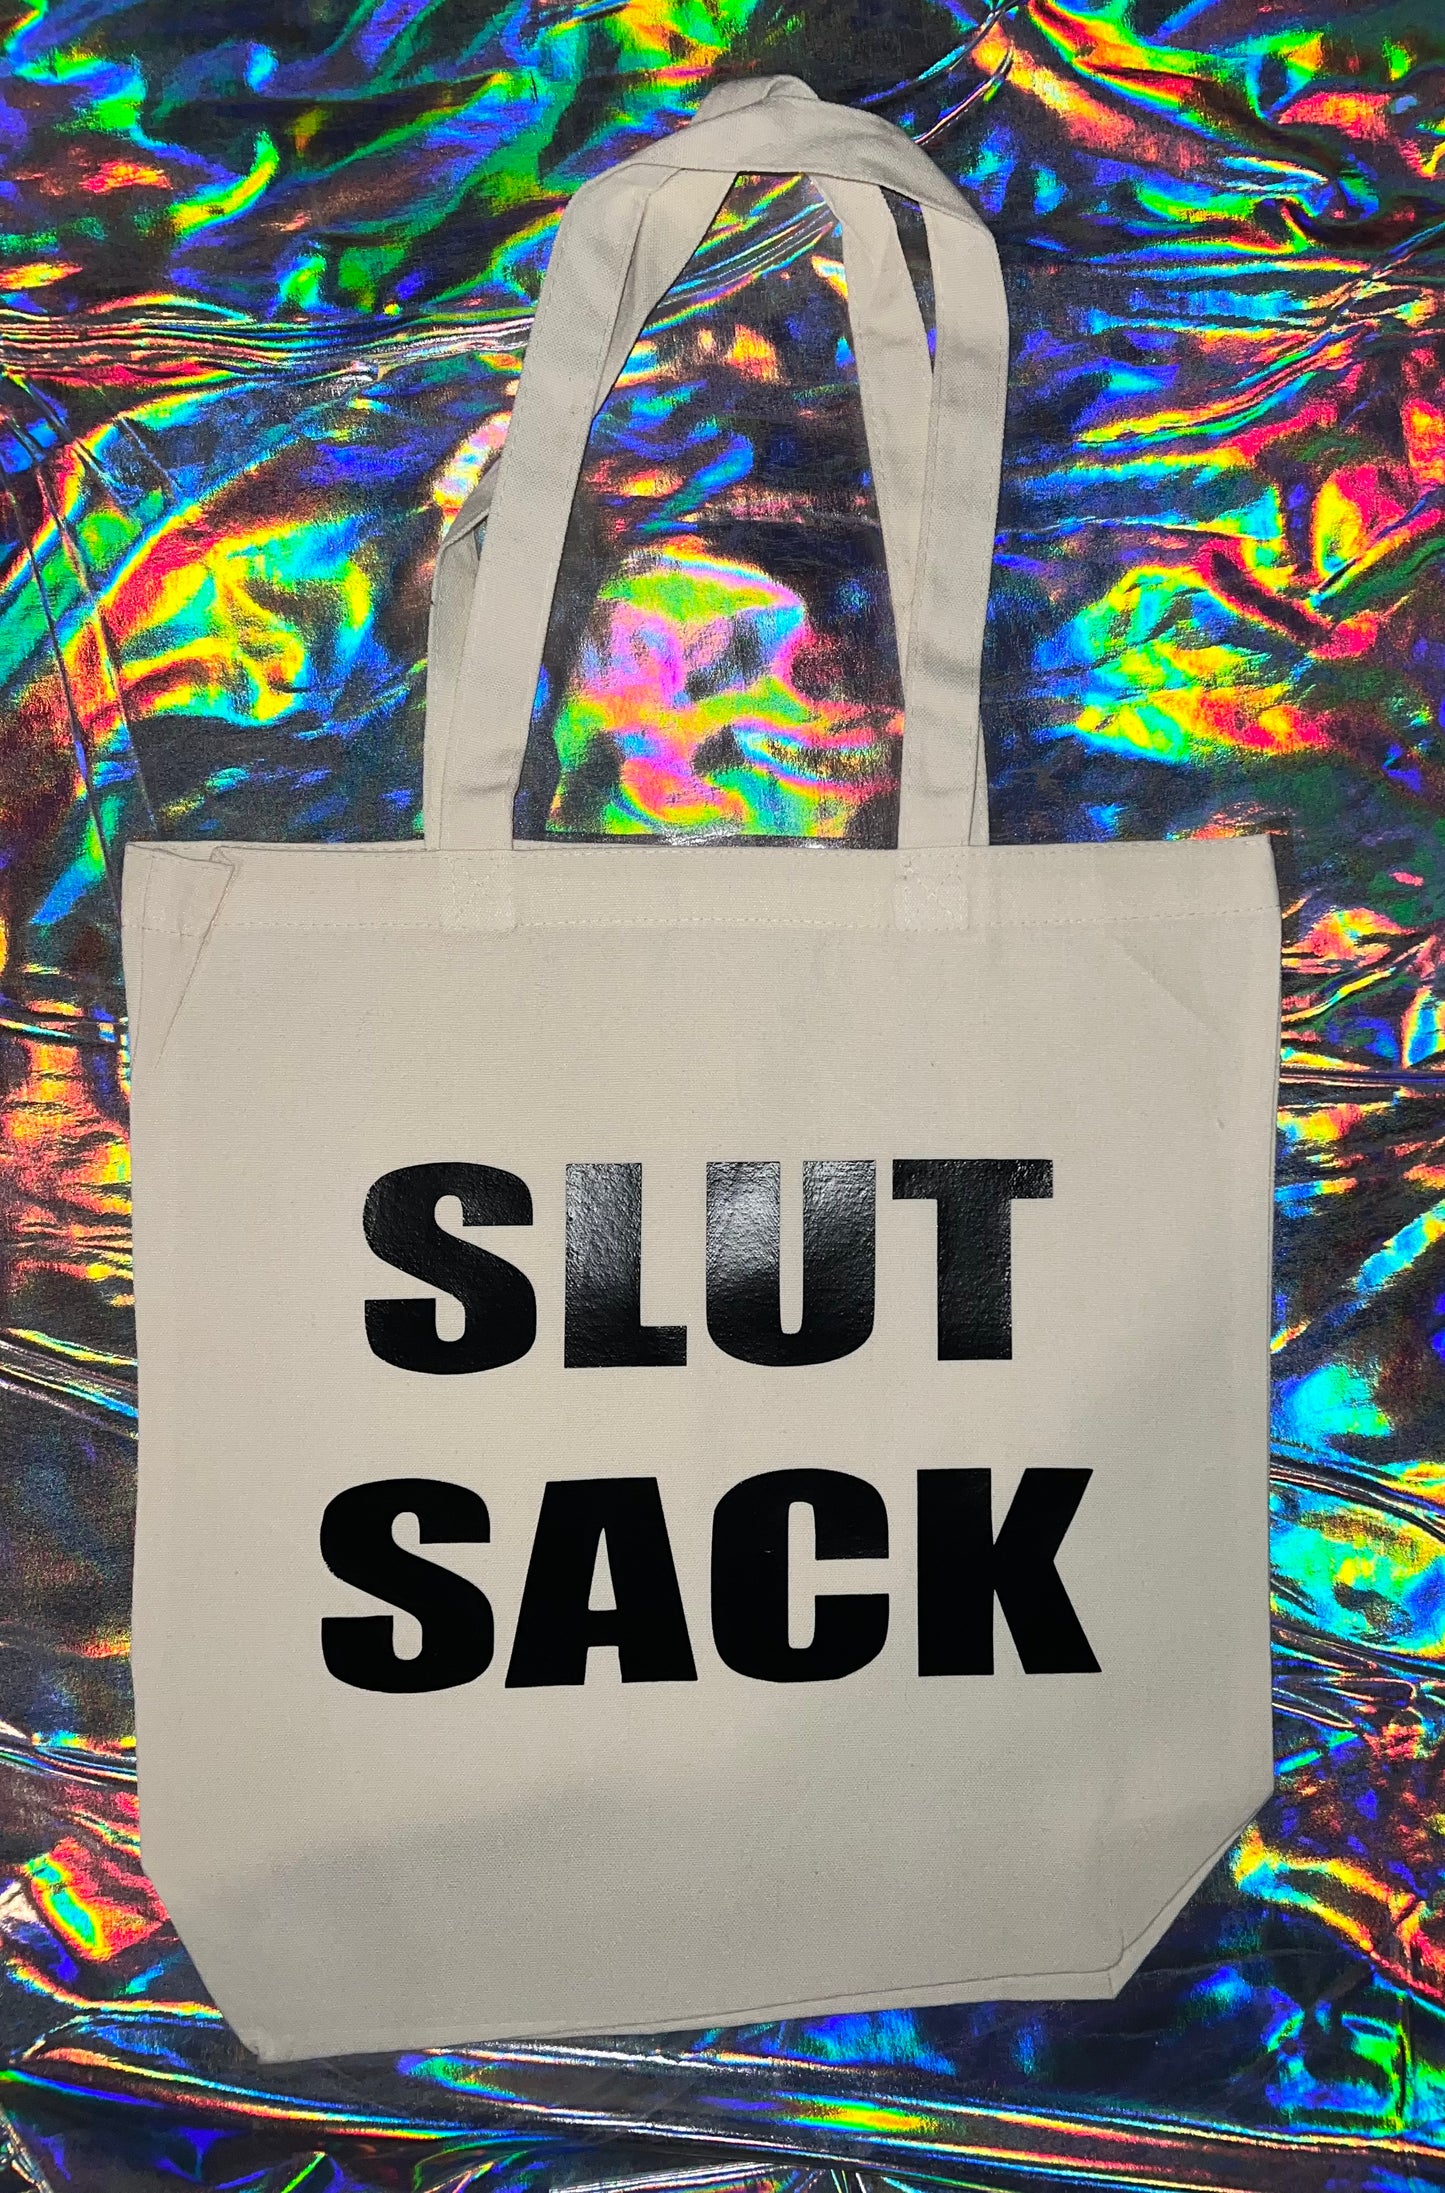 Slut Sack Tote Bag